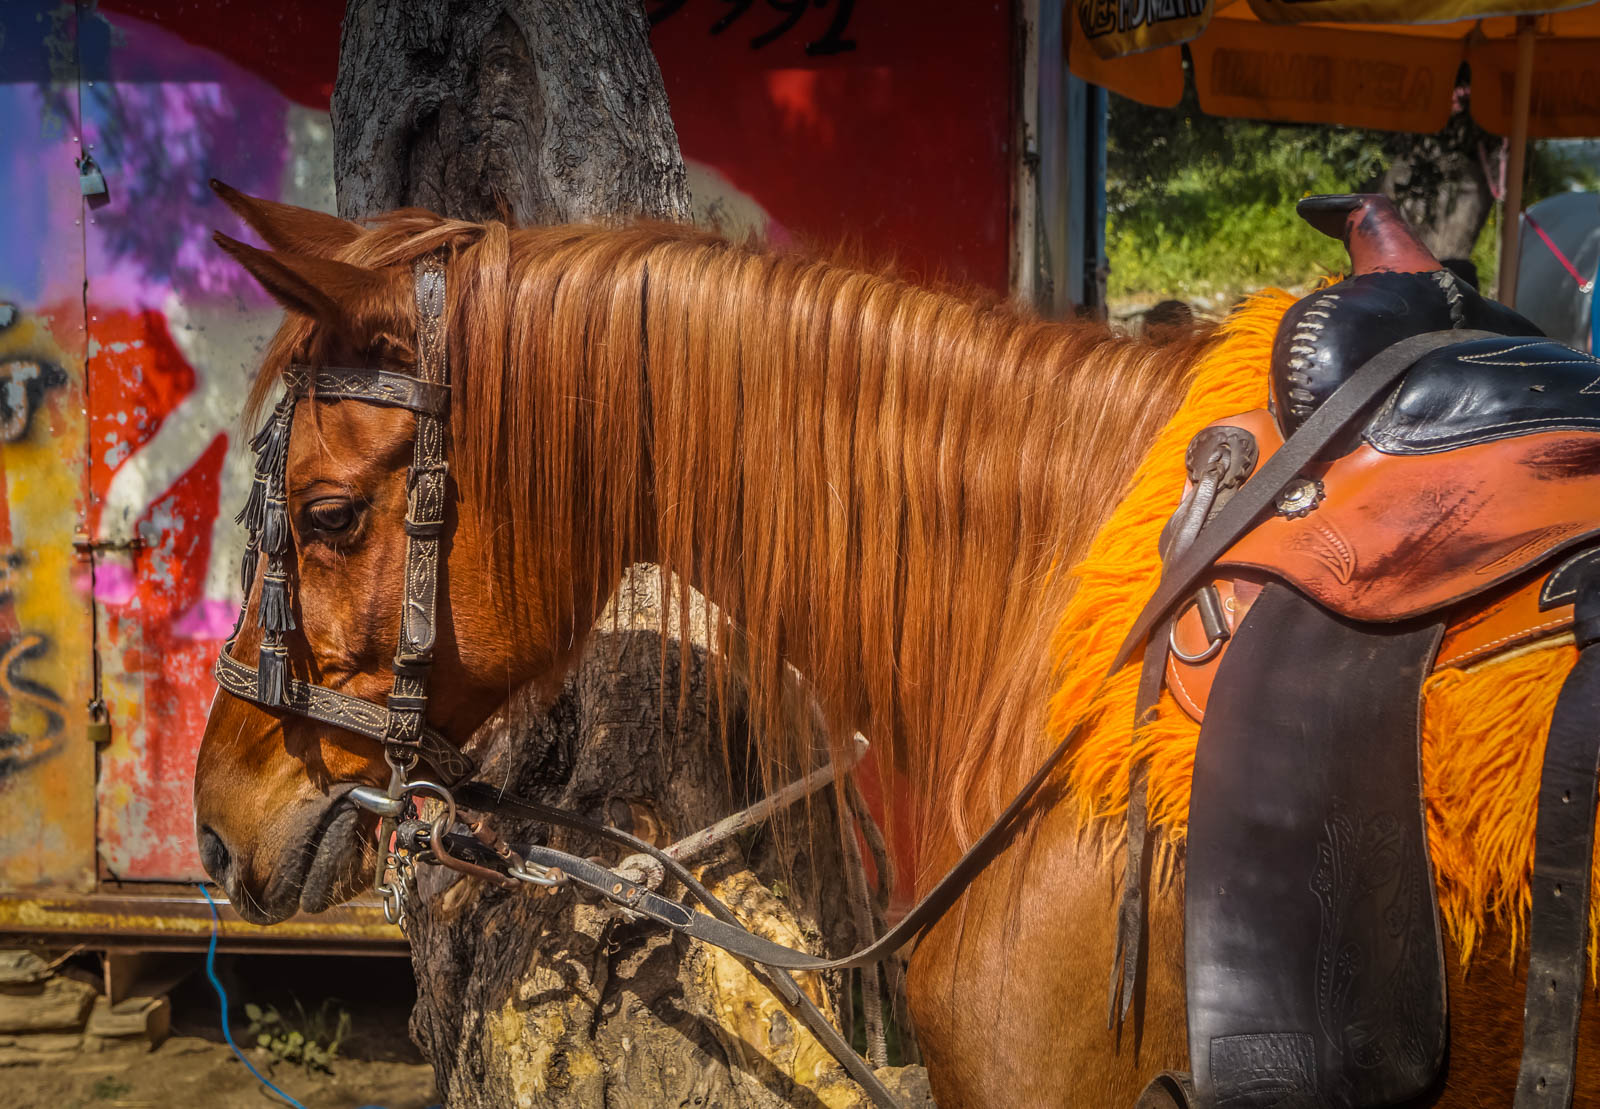 horseback-riding-pelion-greece-la-vie-en-blog-all-rights-reserved-7